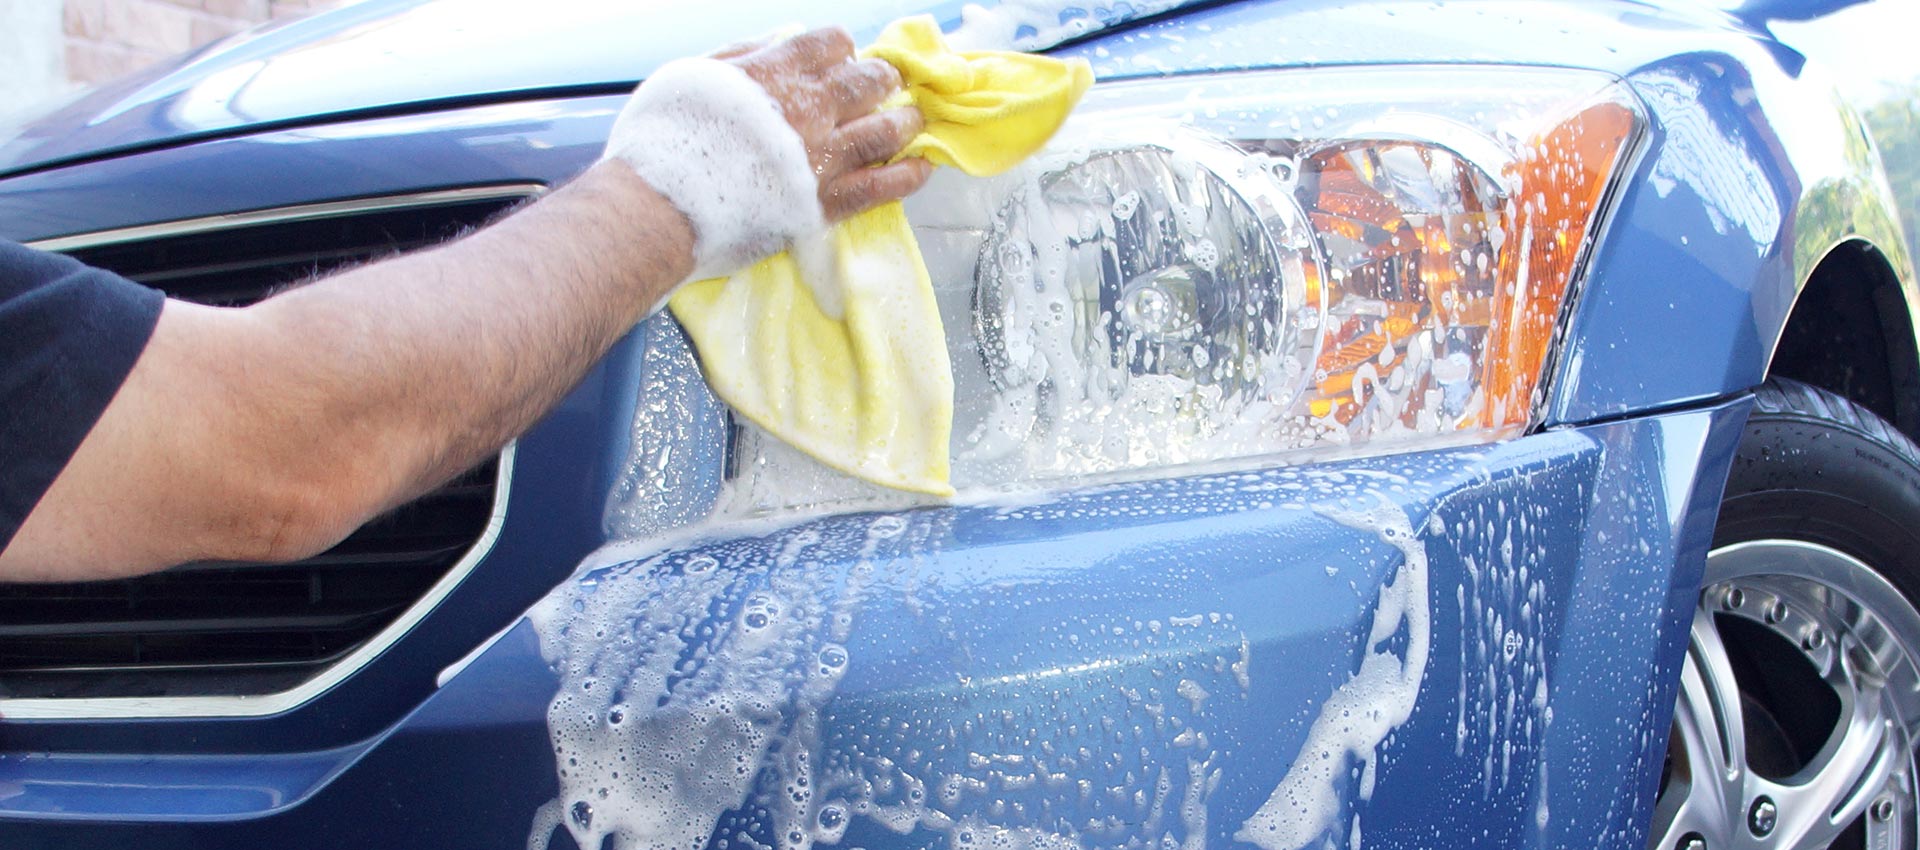 Washing machines cars. Car Wash автомойка. Губка для мойки автомобиля. Мытье автомобиля. Самостоятельная мойка автомобиля.